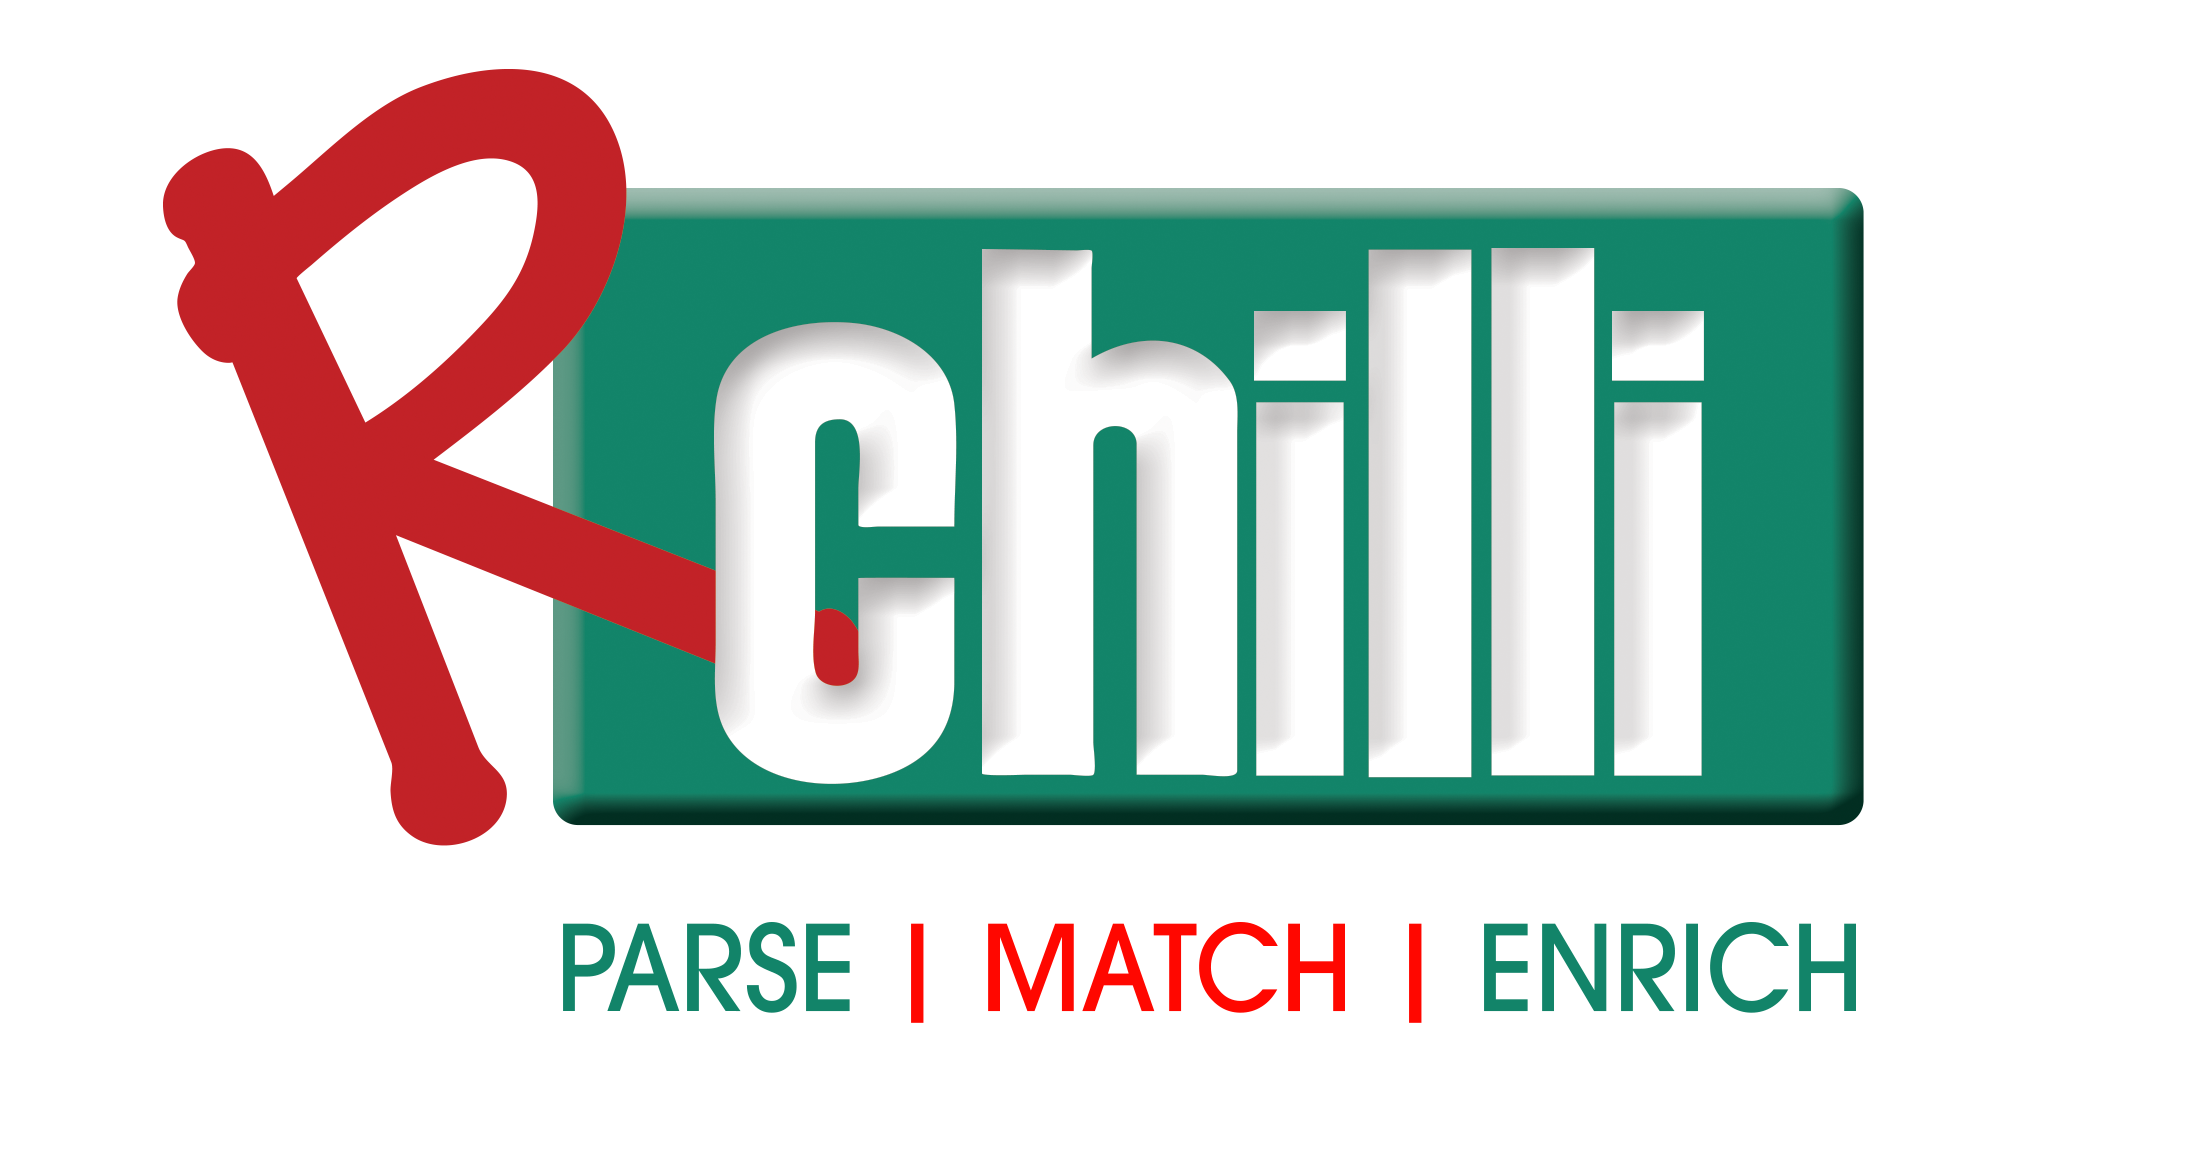 RChilli Logo Parse Match enrich(final)